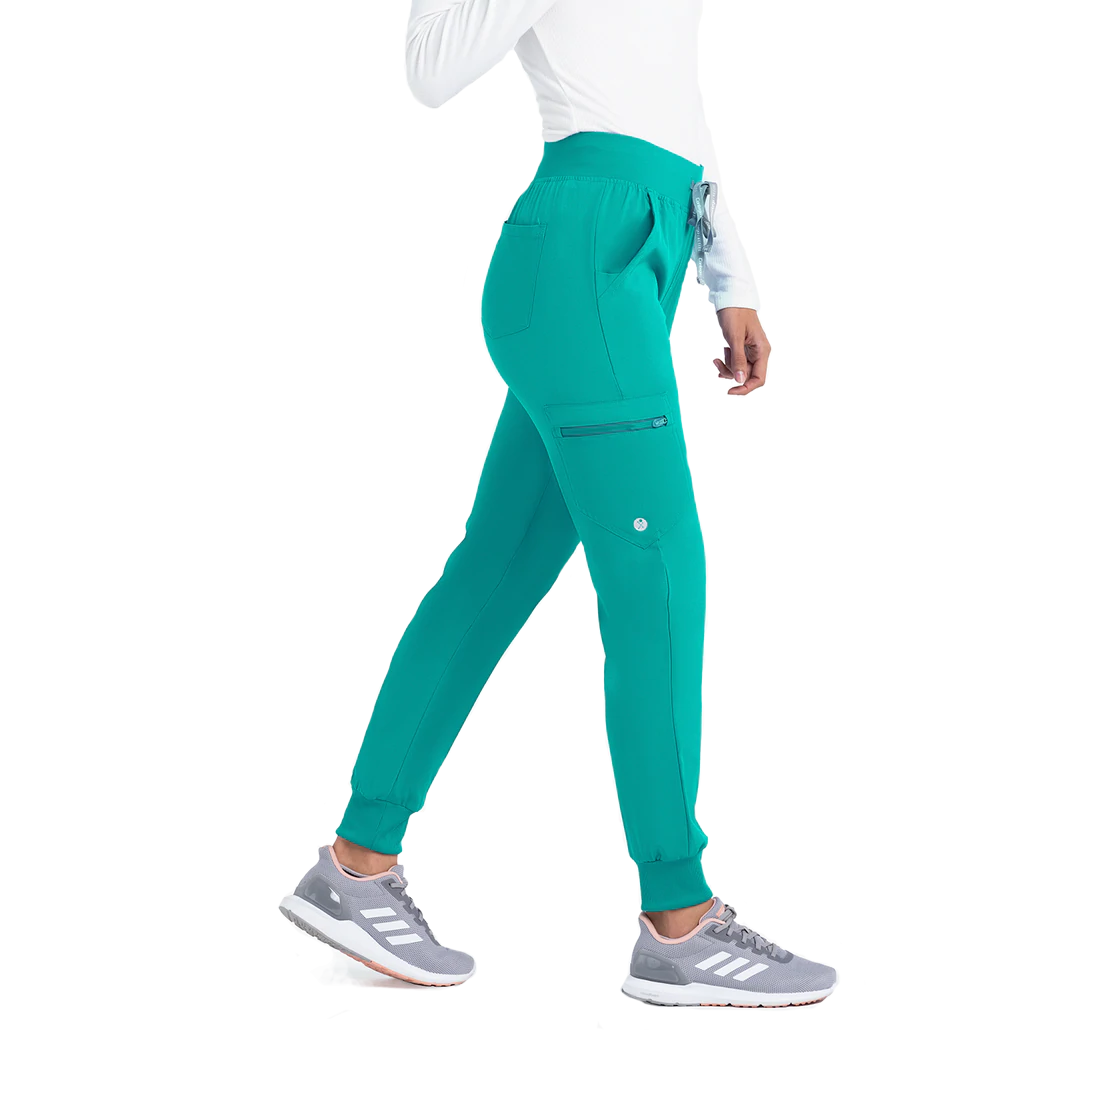 FLX Travel Leisure Yoga Jogger Pants Women's M Ankle Length Green *